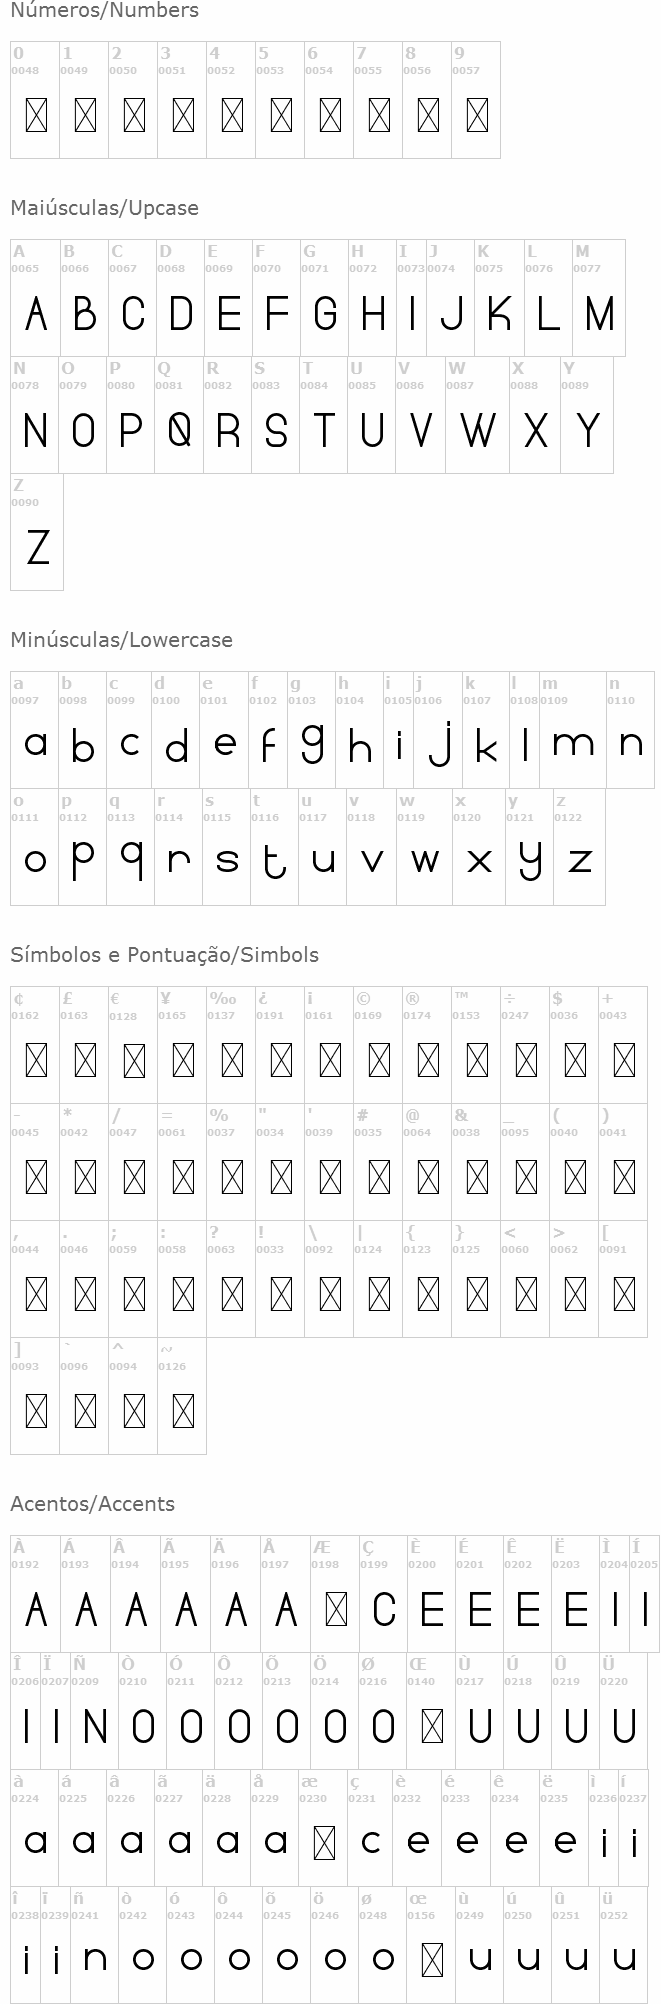 Fairry Eastern Serif